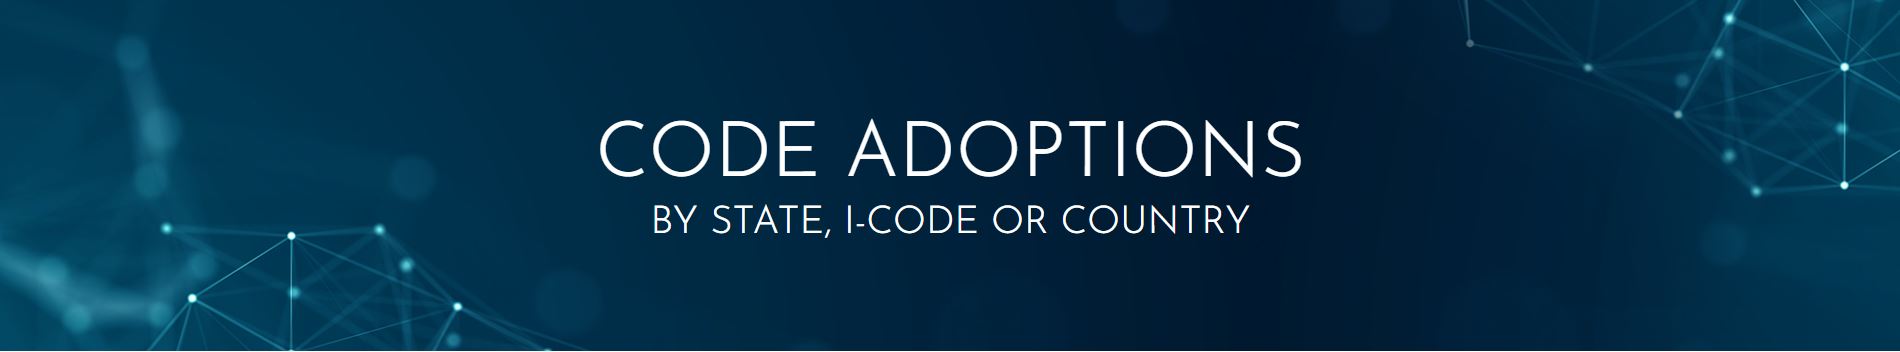 Code Adoptions